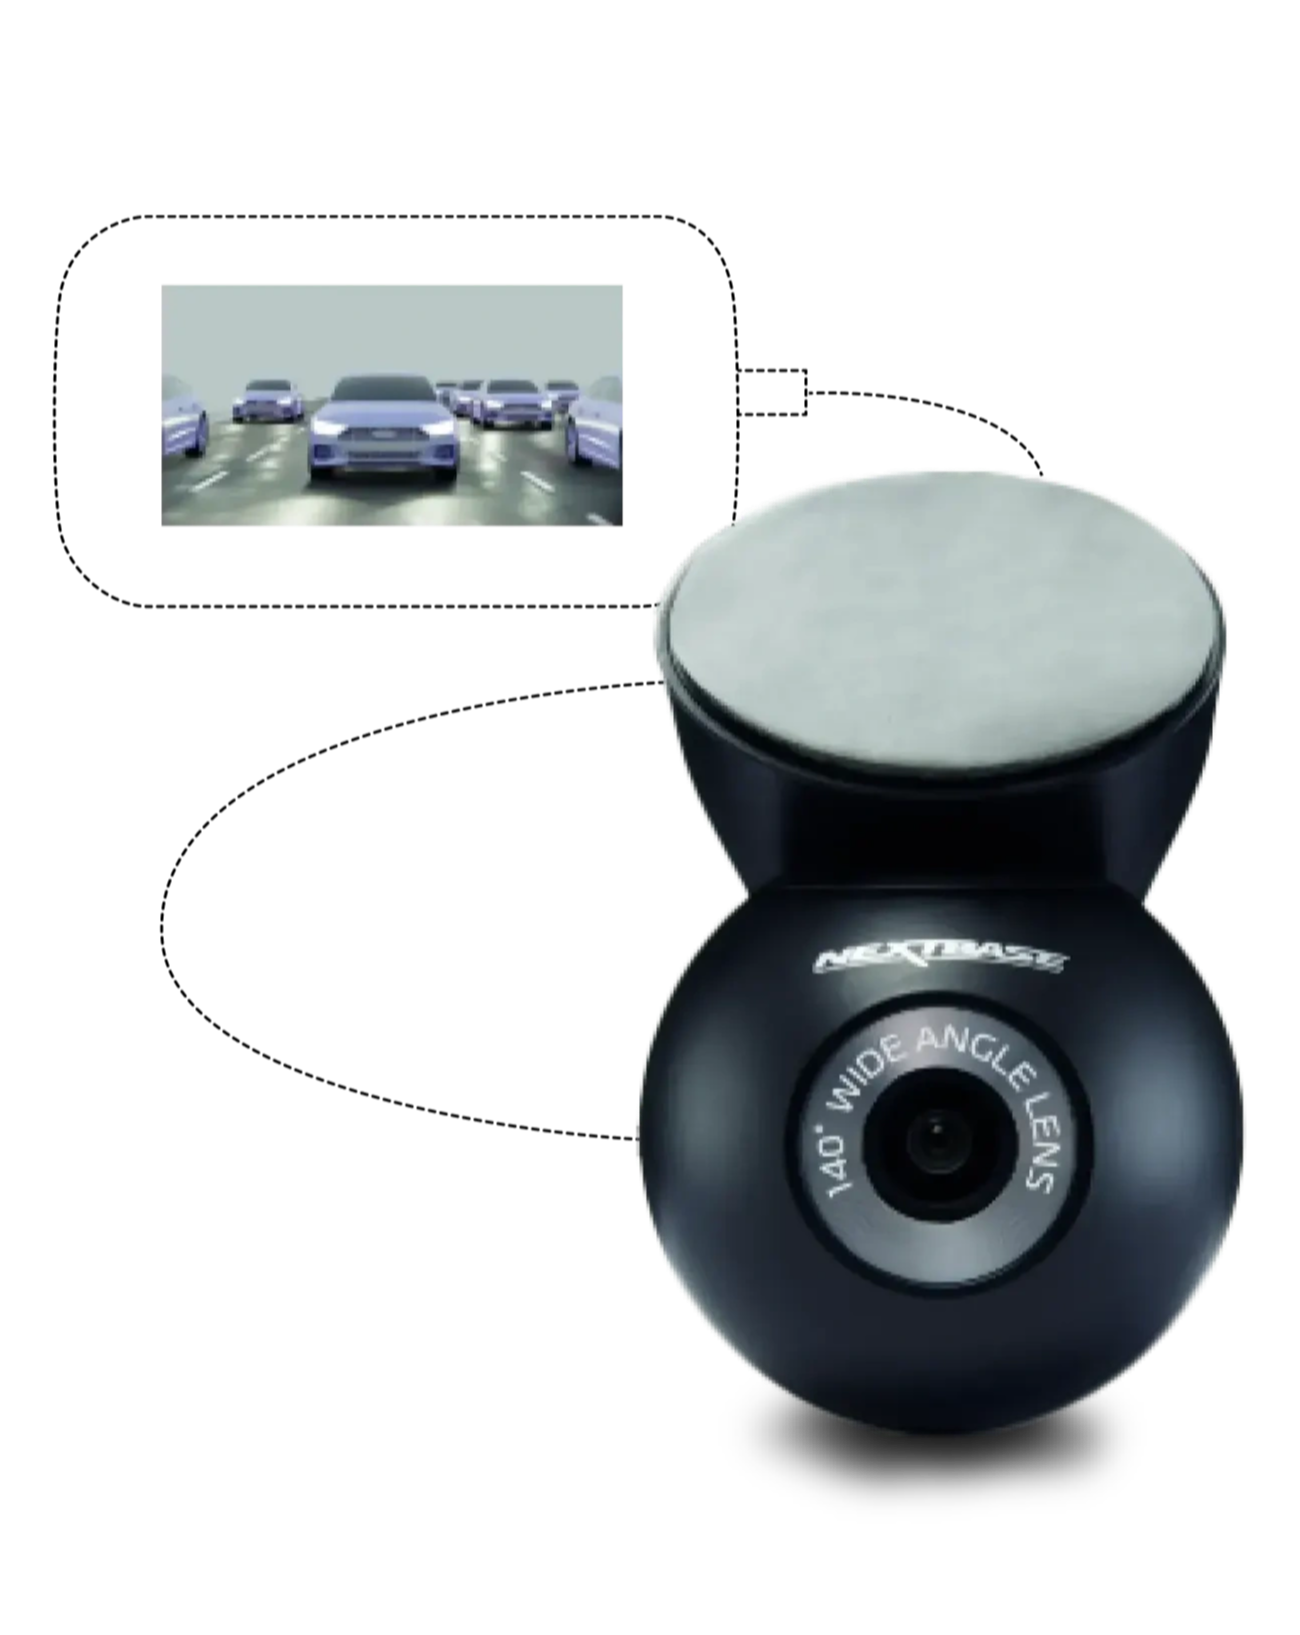 New NextBase 2k IQ Smart HD Dash Cam – PayMore Doraville